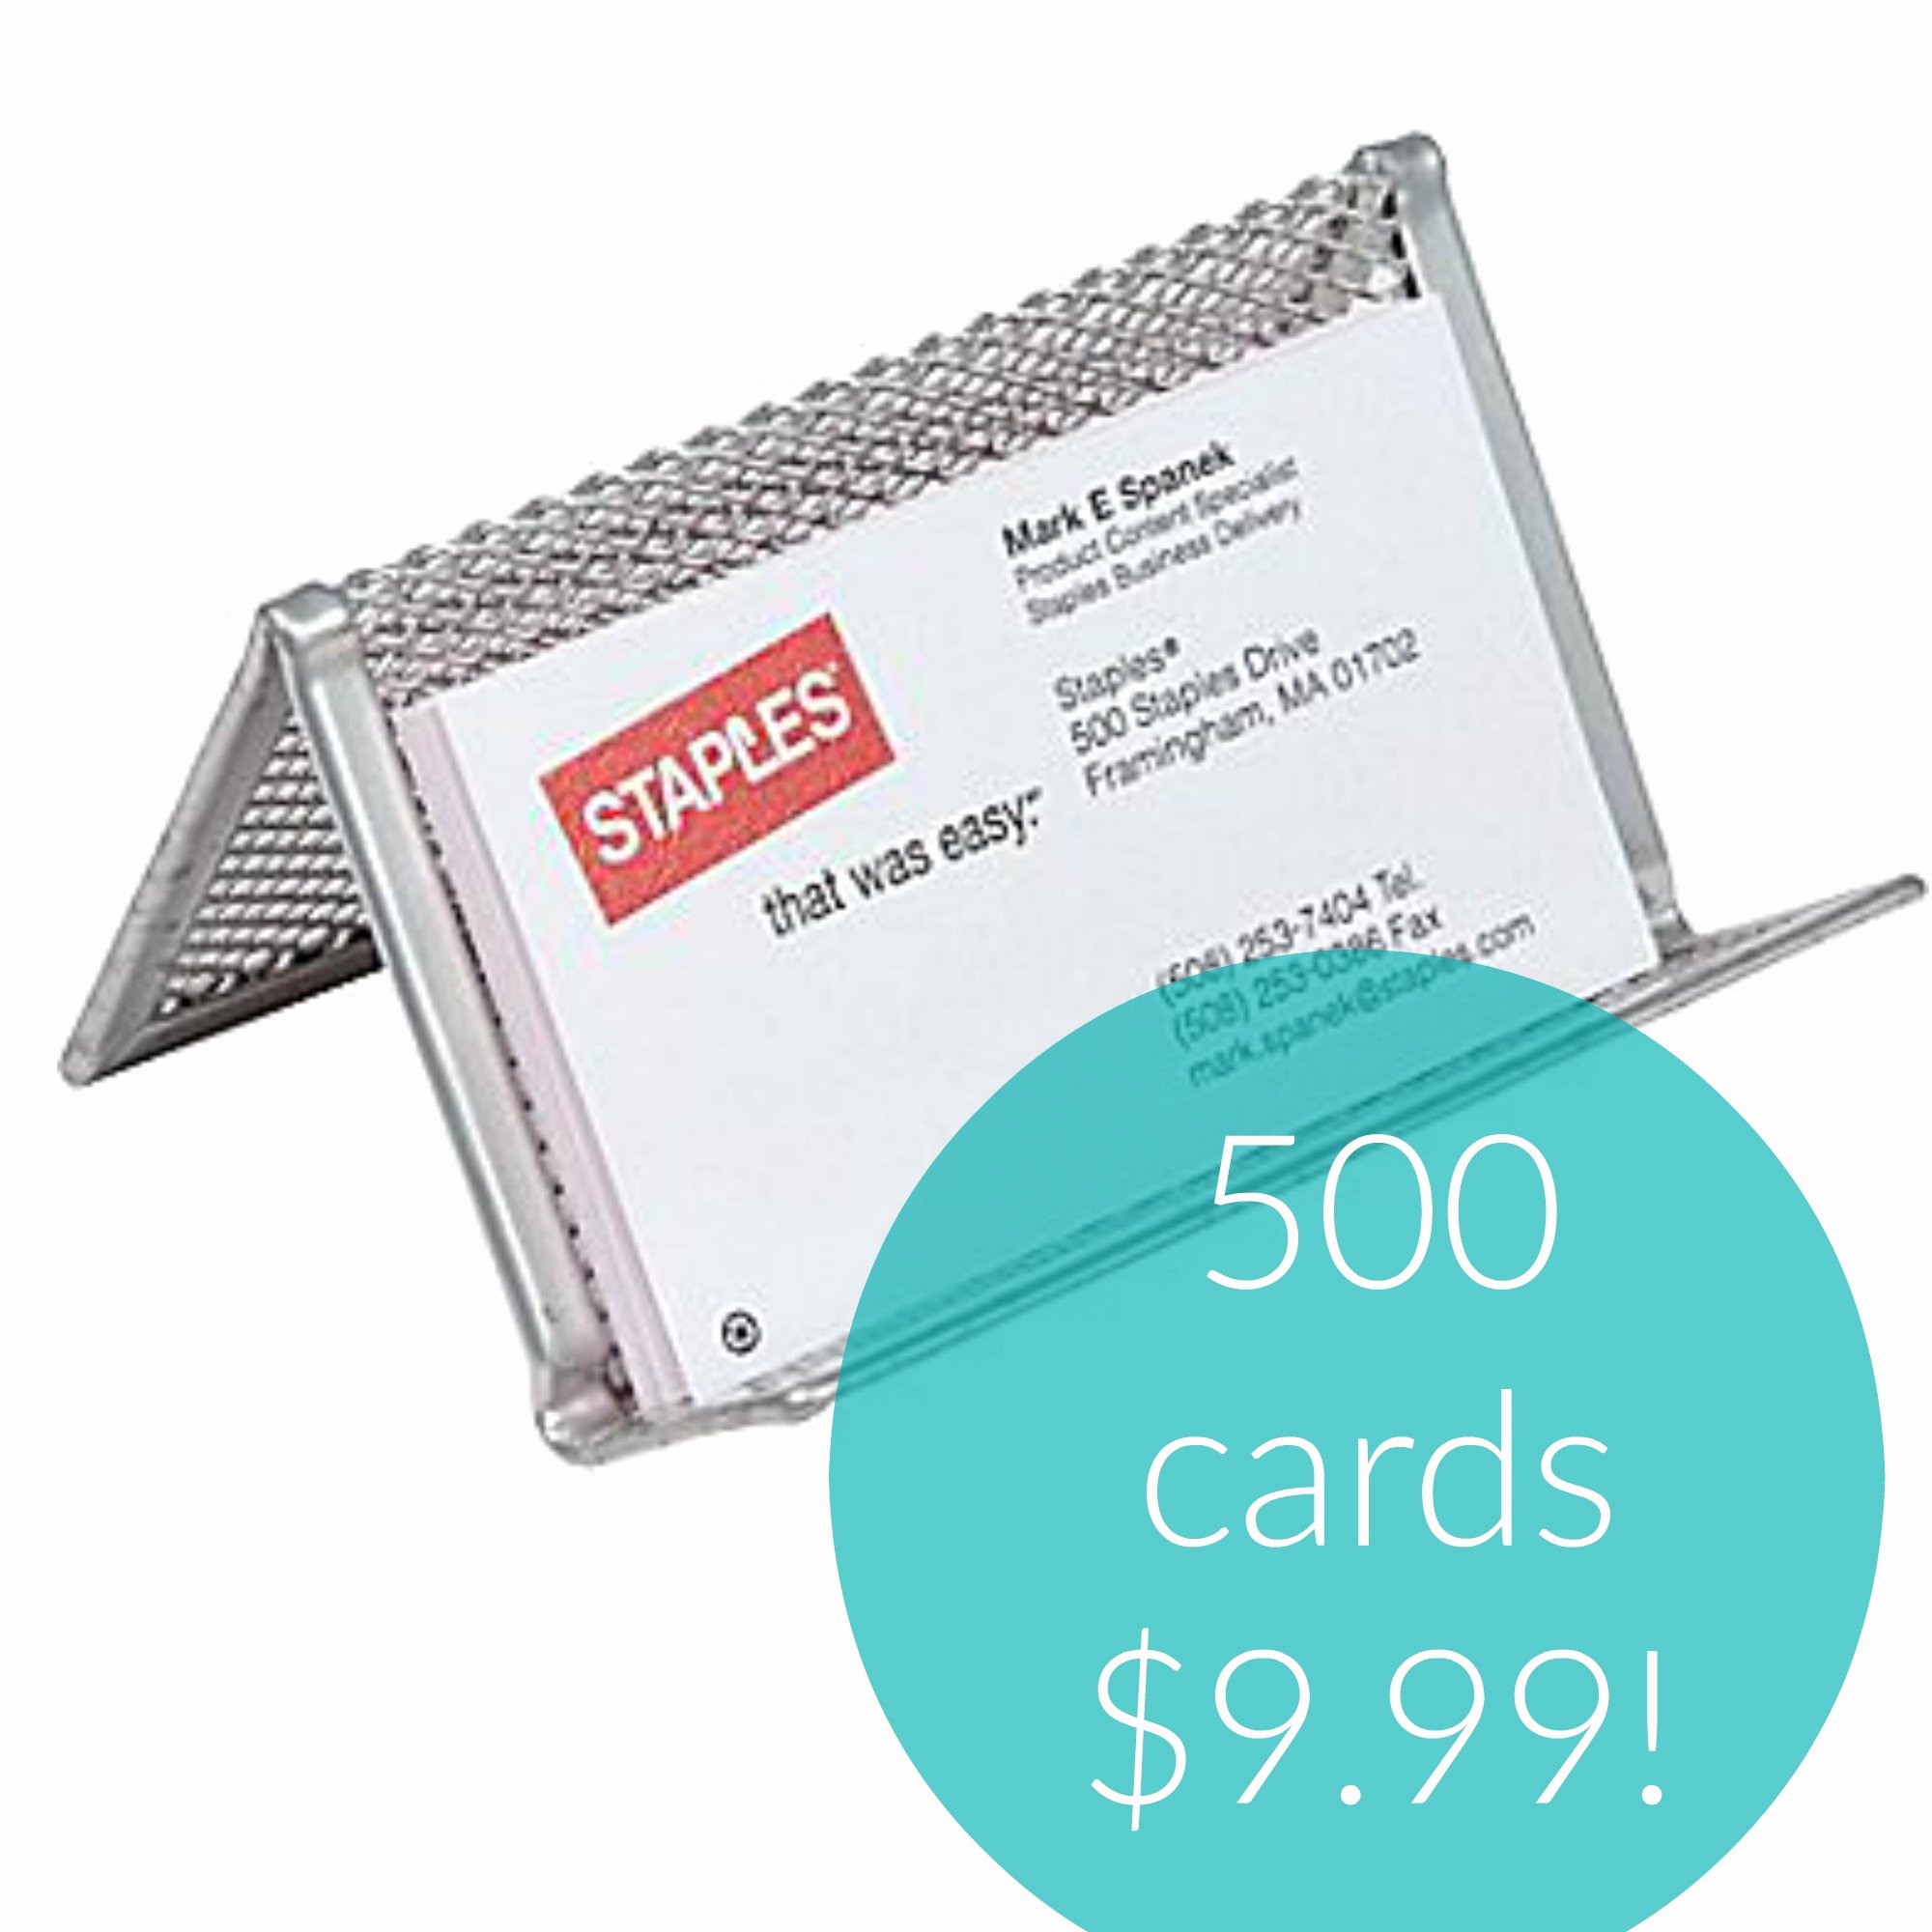 Staples Business Cards Template Elegant Print 500 Business Cards for Ly $9 99 at Staples Great